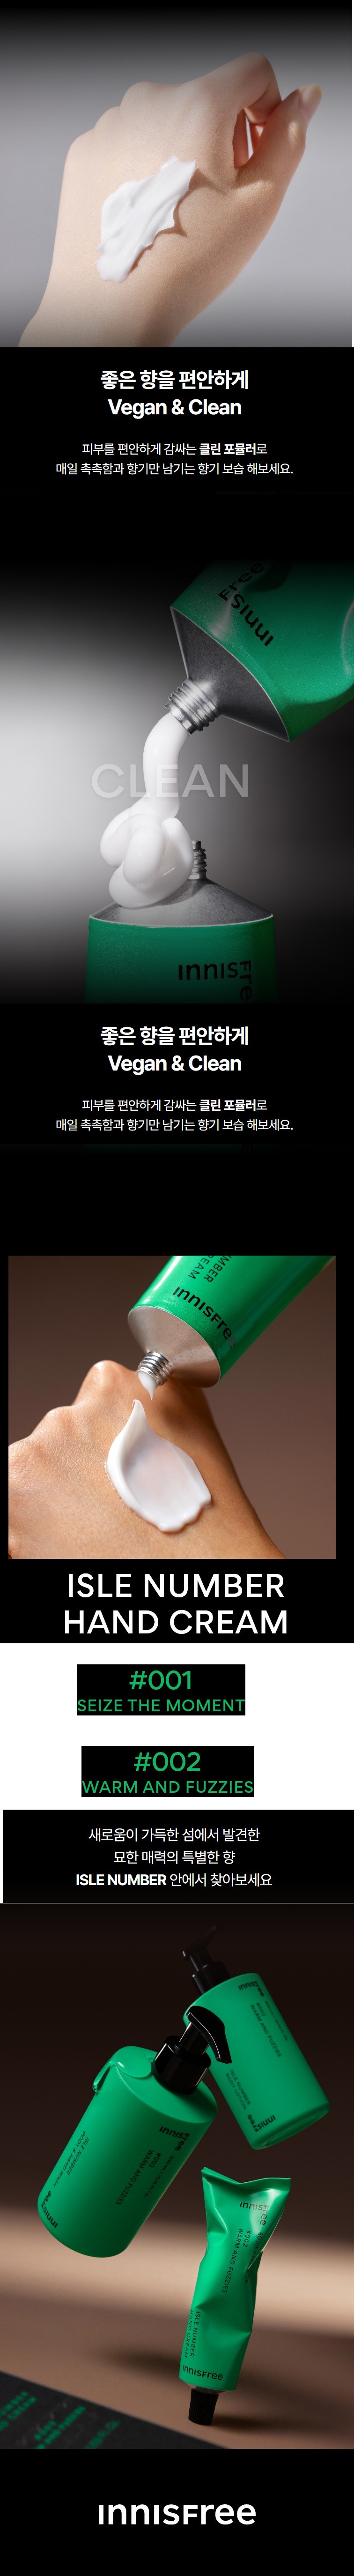 Innisfree Isle Number Hand Cream korean skincare product online shop malaysia denmark italy2